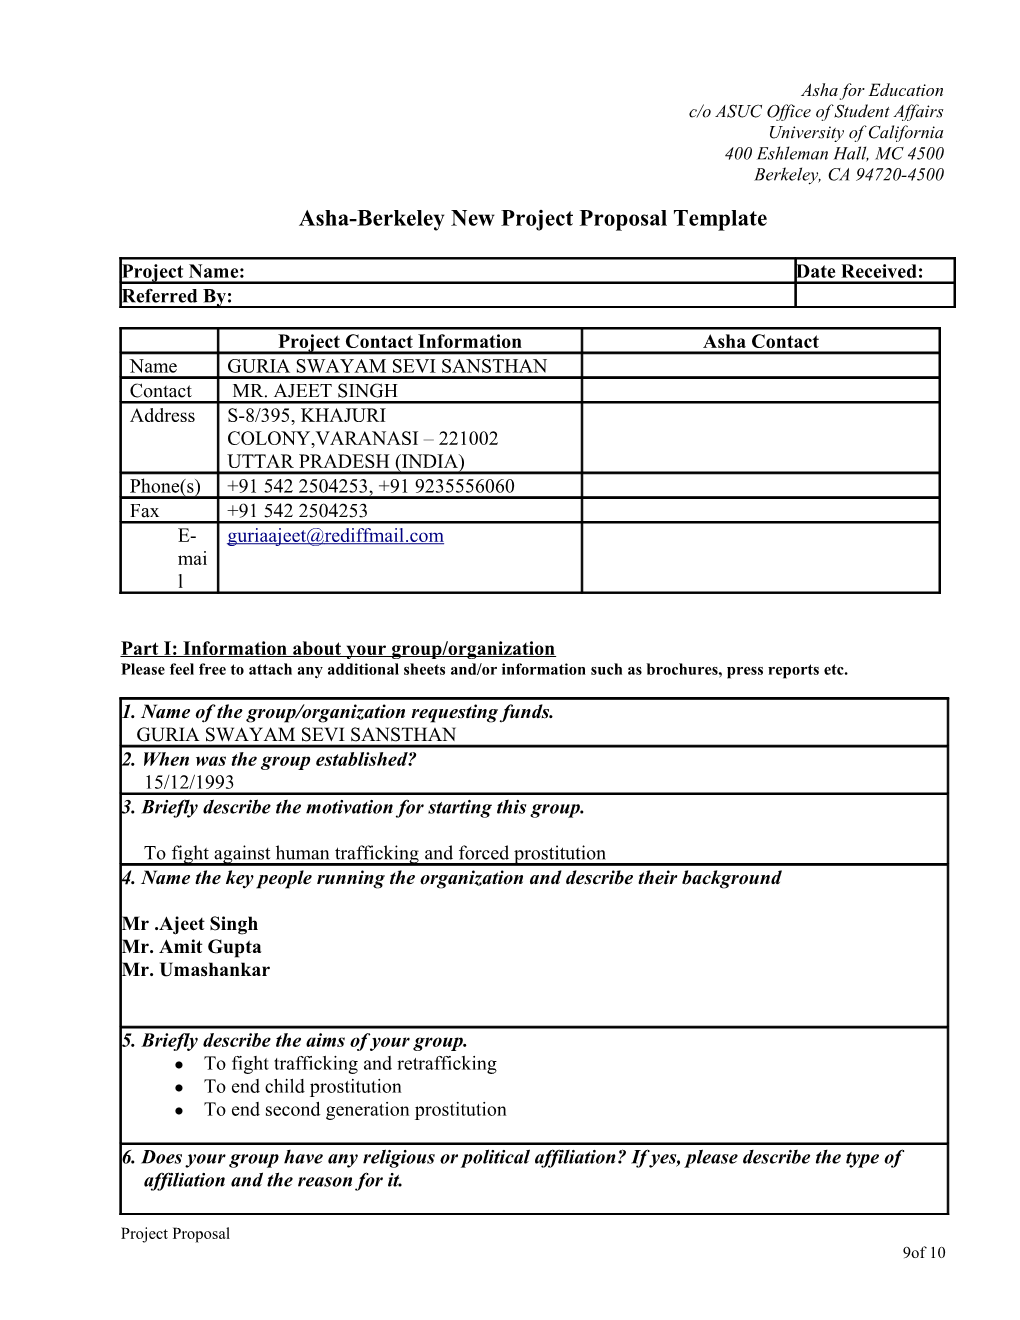 Asha-Berkeley New Project Proposal Template